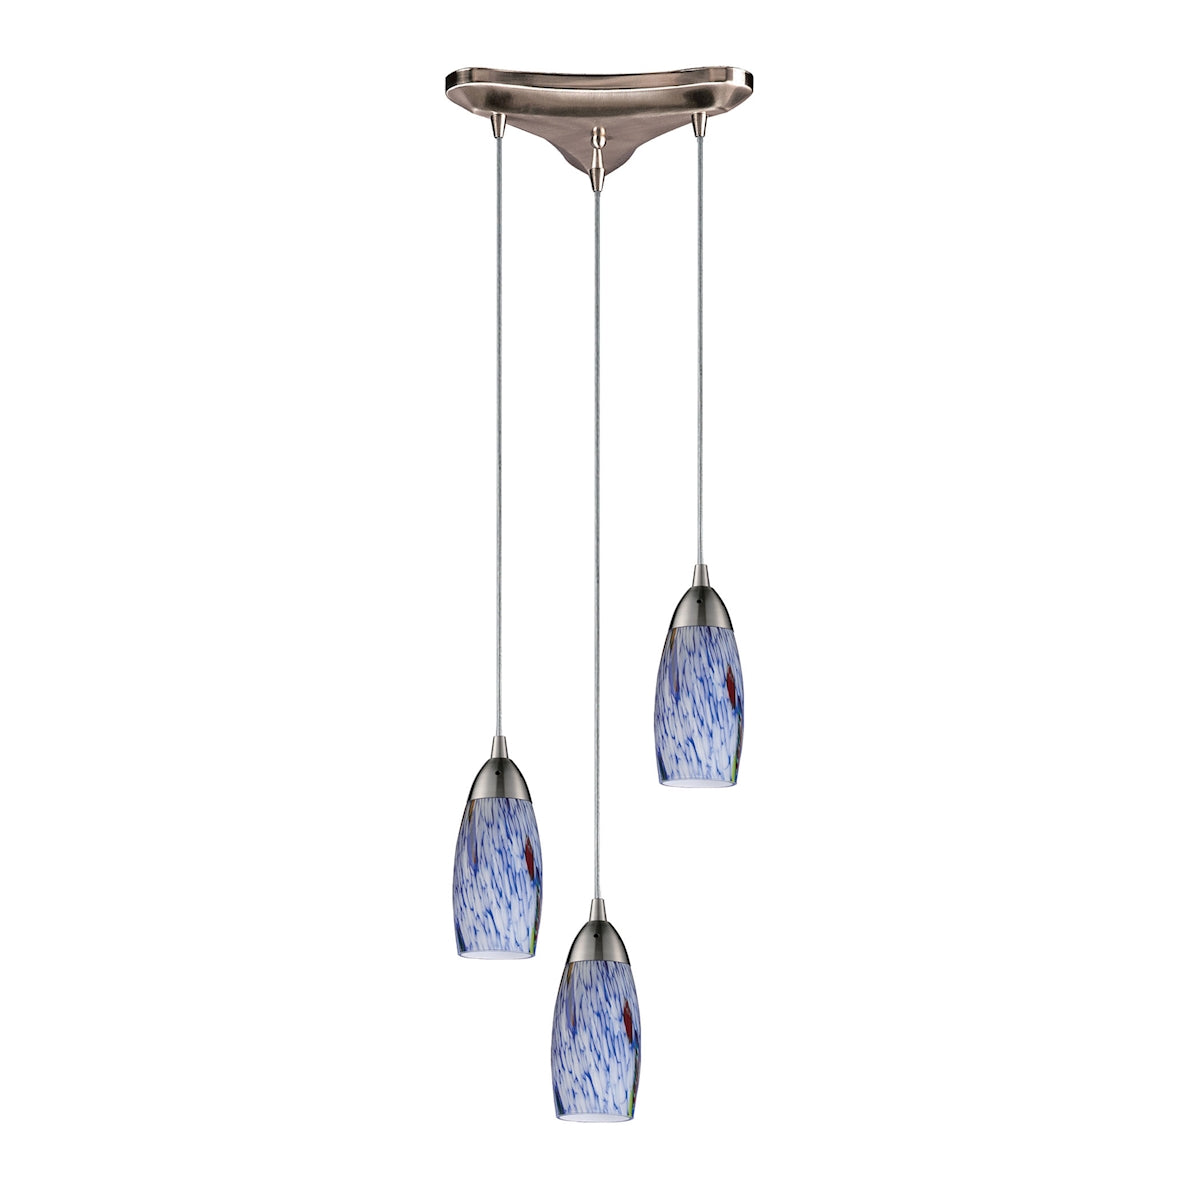 ELK Lighting 110-3BL Milan 3-Light Triangular Pendant Fixture in Satin Nickel with Starburst Blue Glass